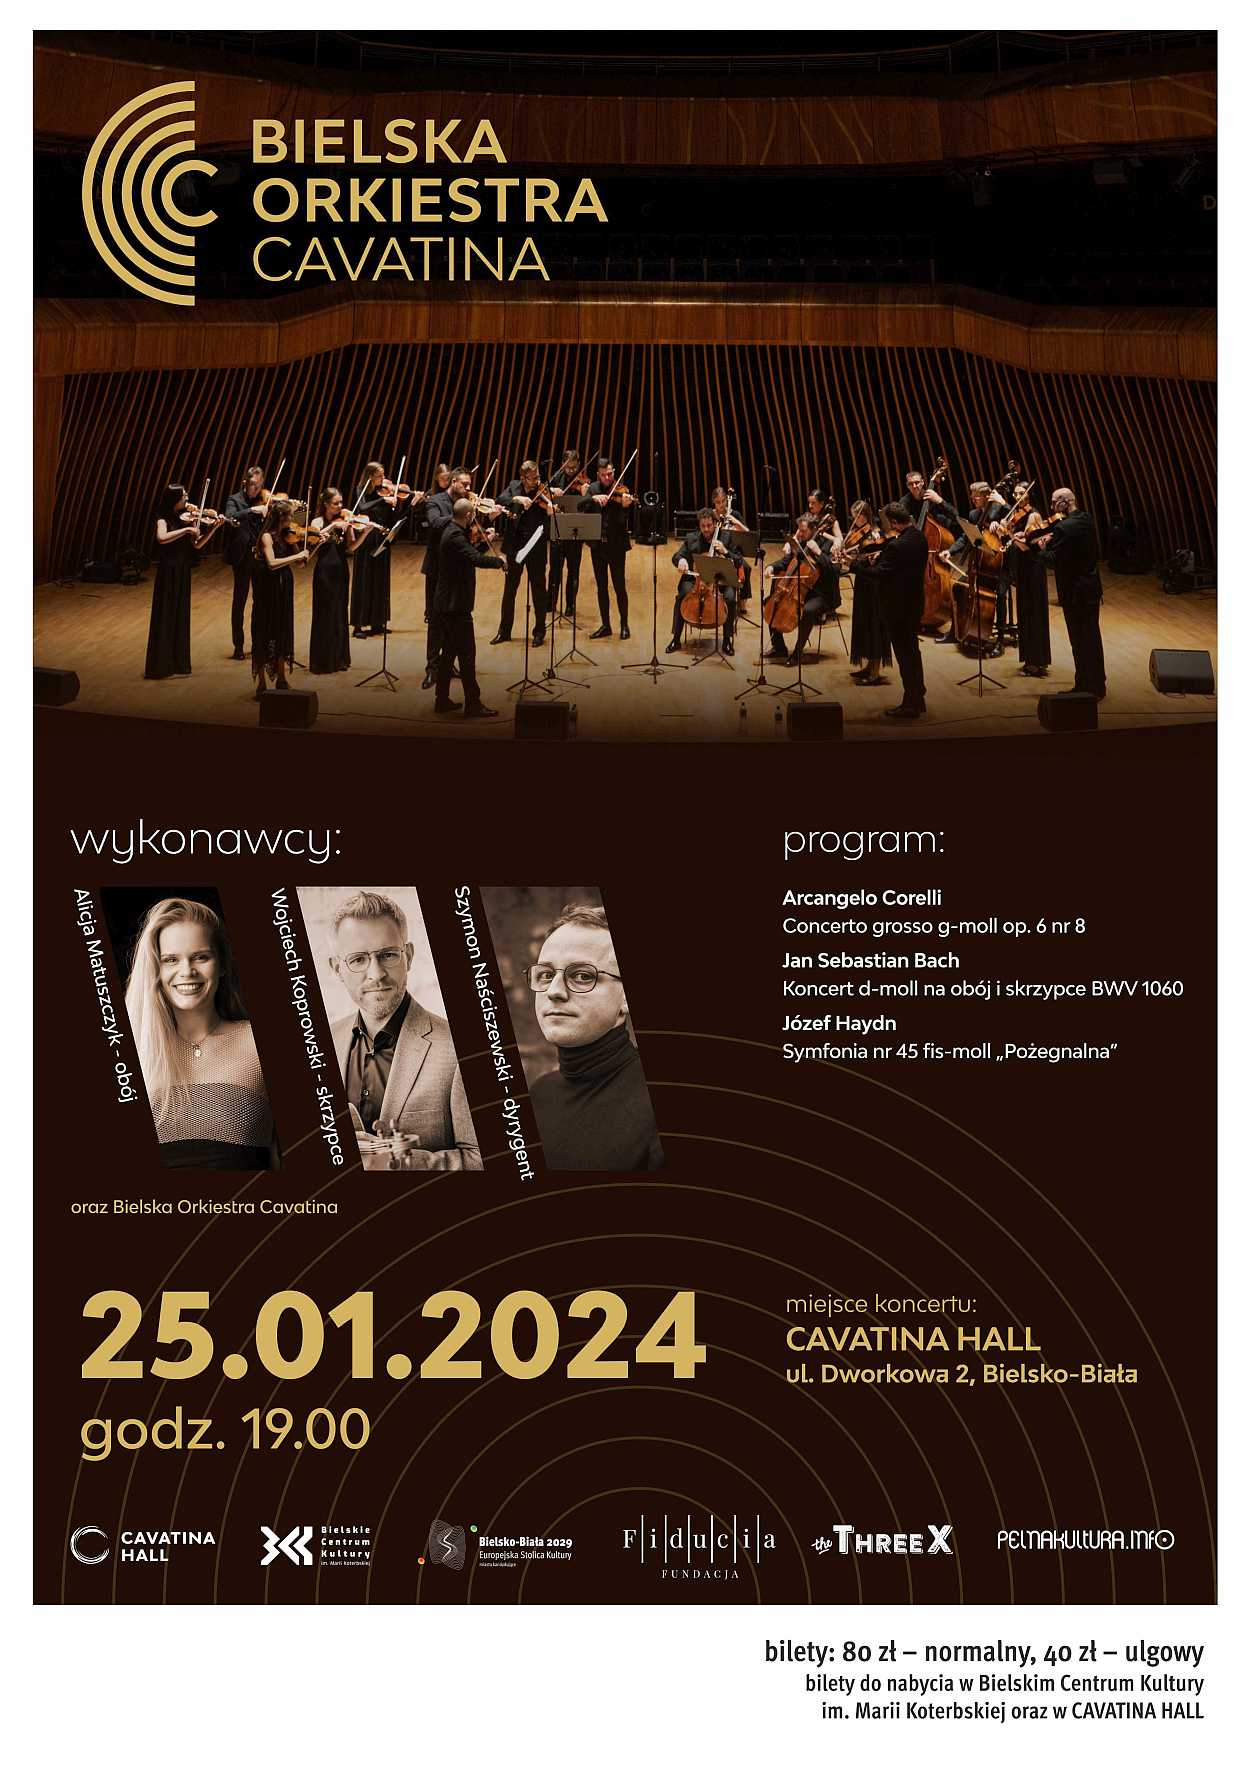 Plakat organizatora / Bielska Orkiestra Cavatina